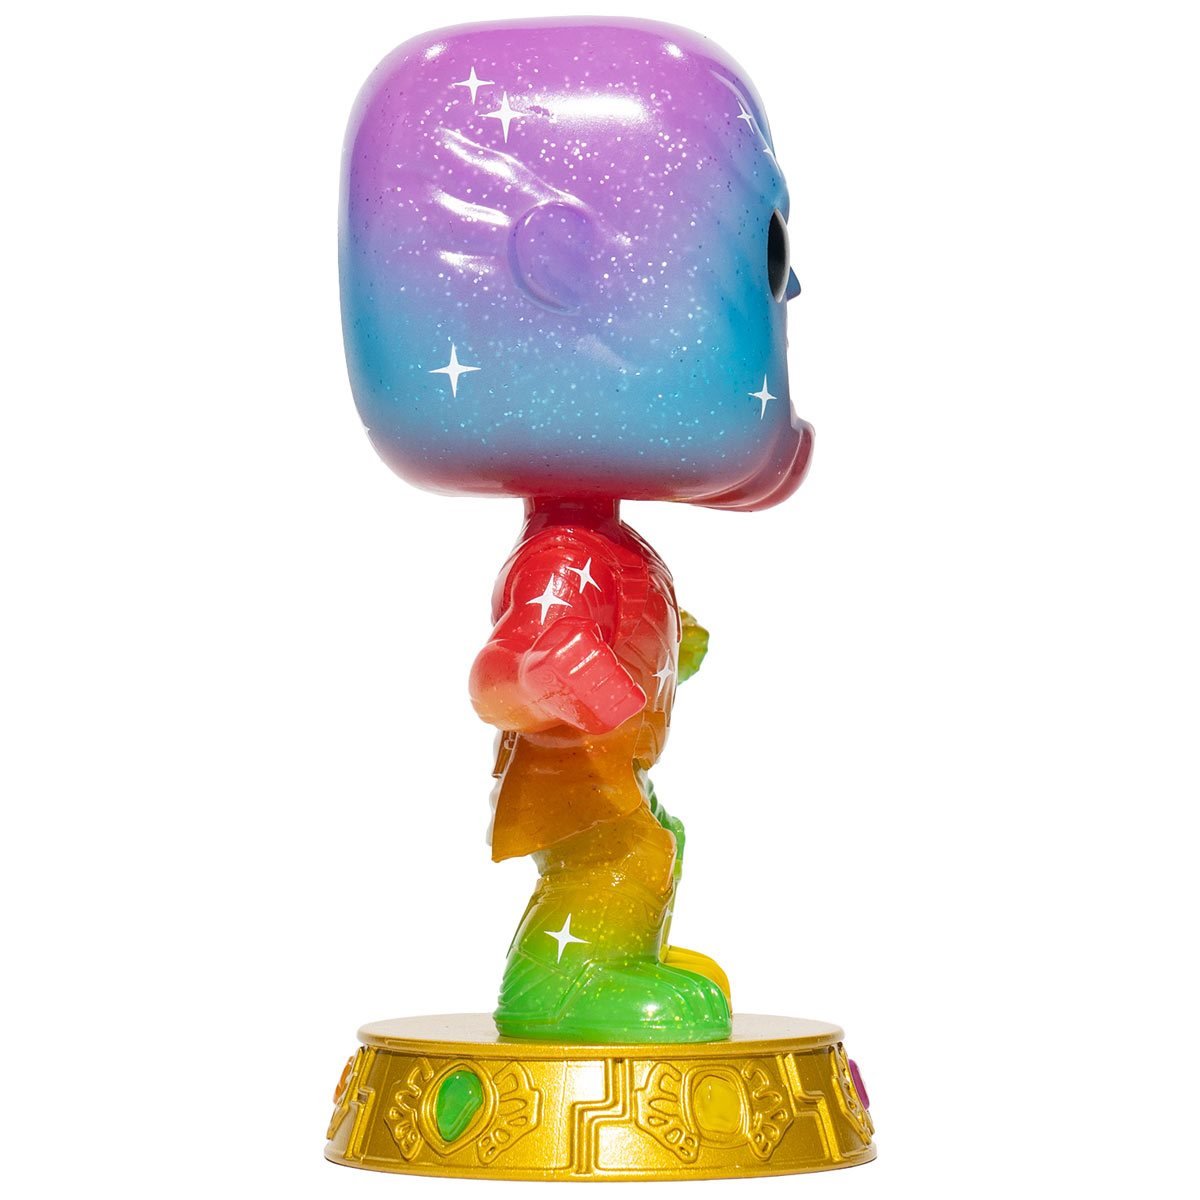 Marvel Infinity Saga Thanos Art Series Pop! Vinyl Figure with Premium Pop! Protector Hasbro